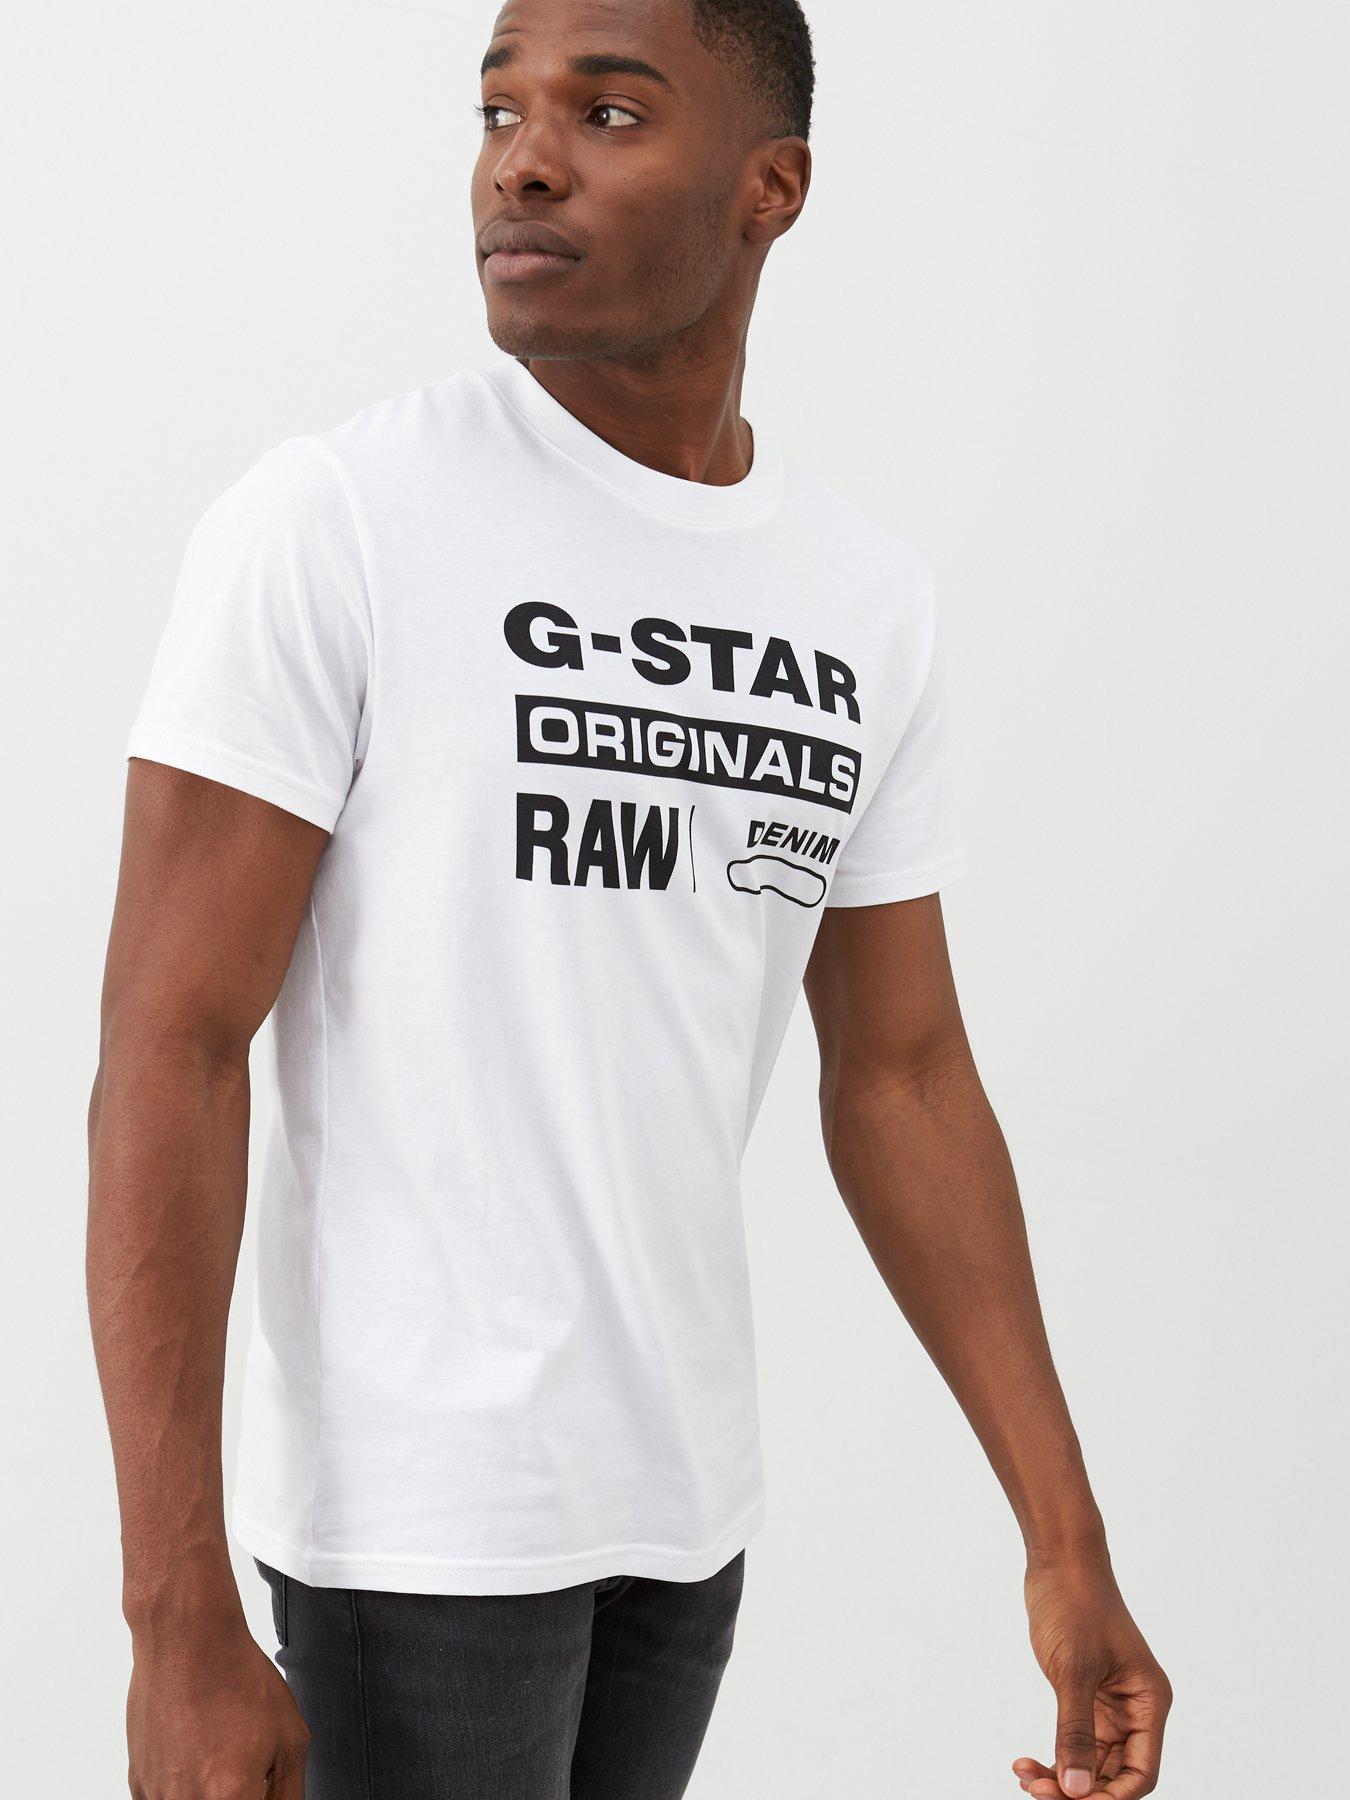 g star raw shirts price